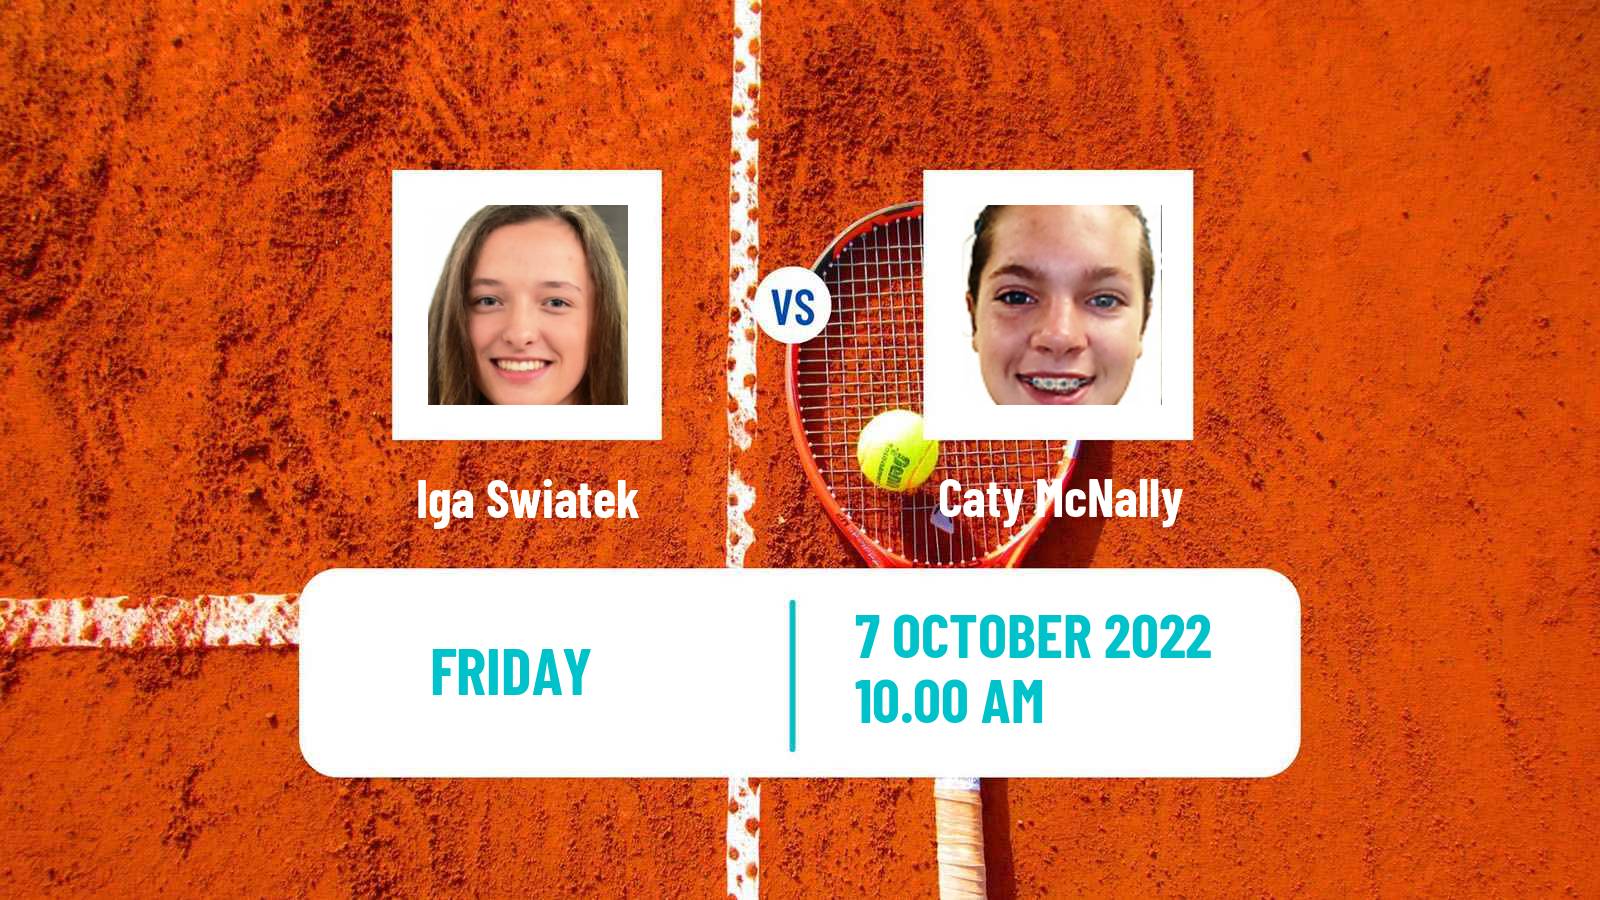 Tennis WTA Ostrava Iga Swiatek - Caty McNally